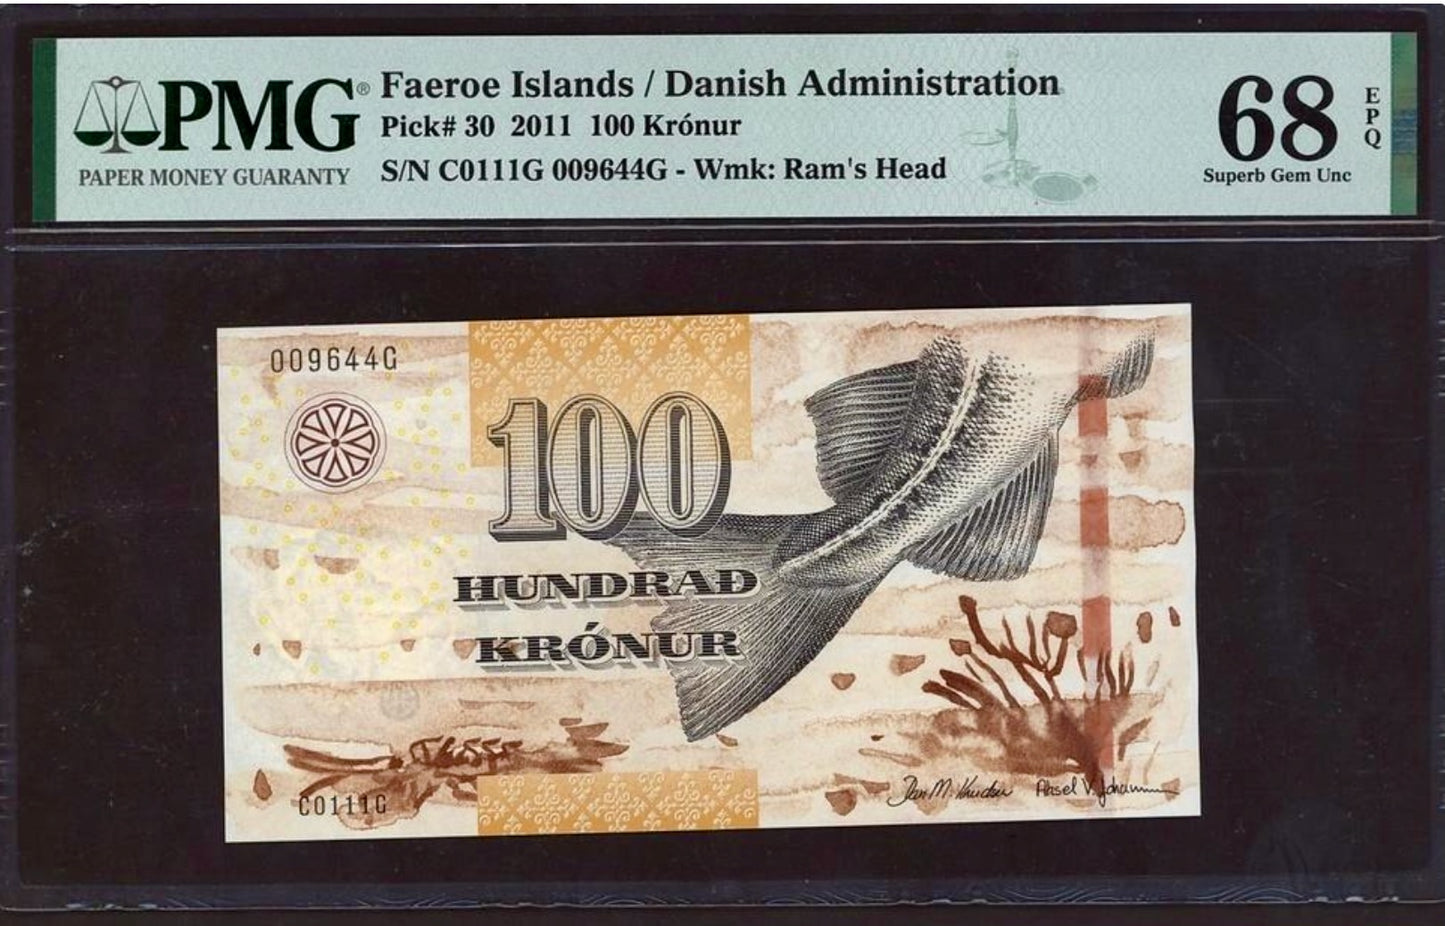 FAEROE ISLANDS P.30 2011 100 Kronur SUPERB GEM 68 UNC